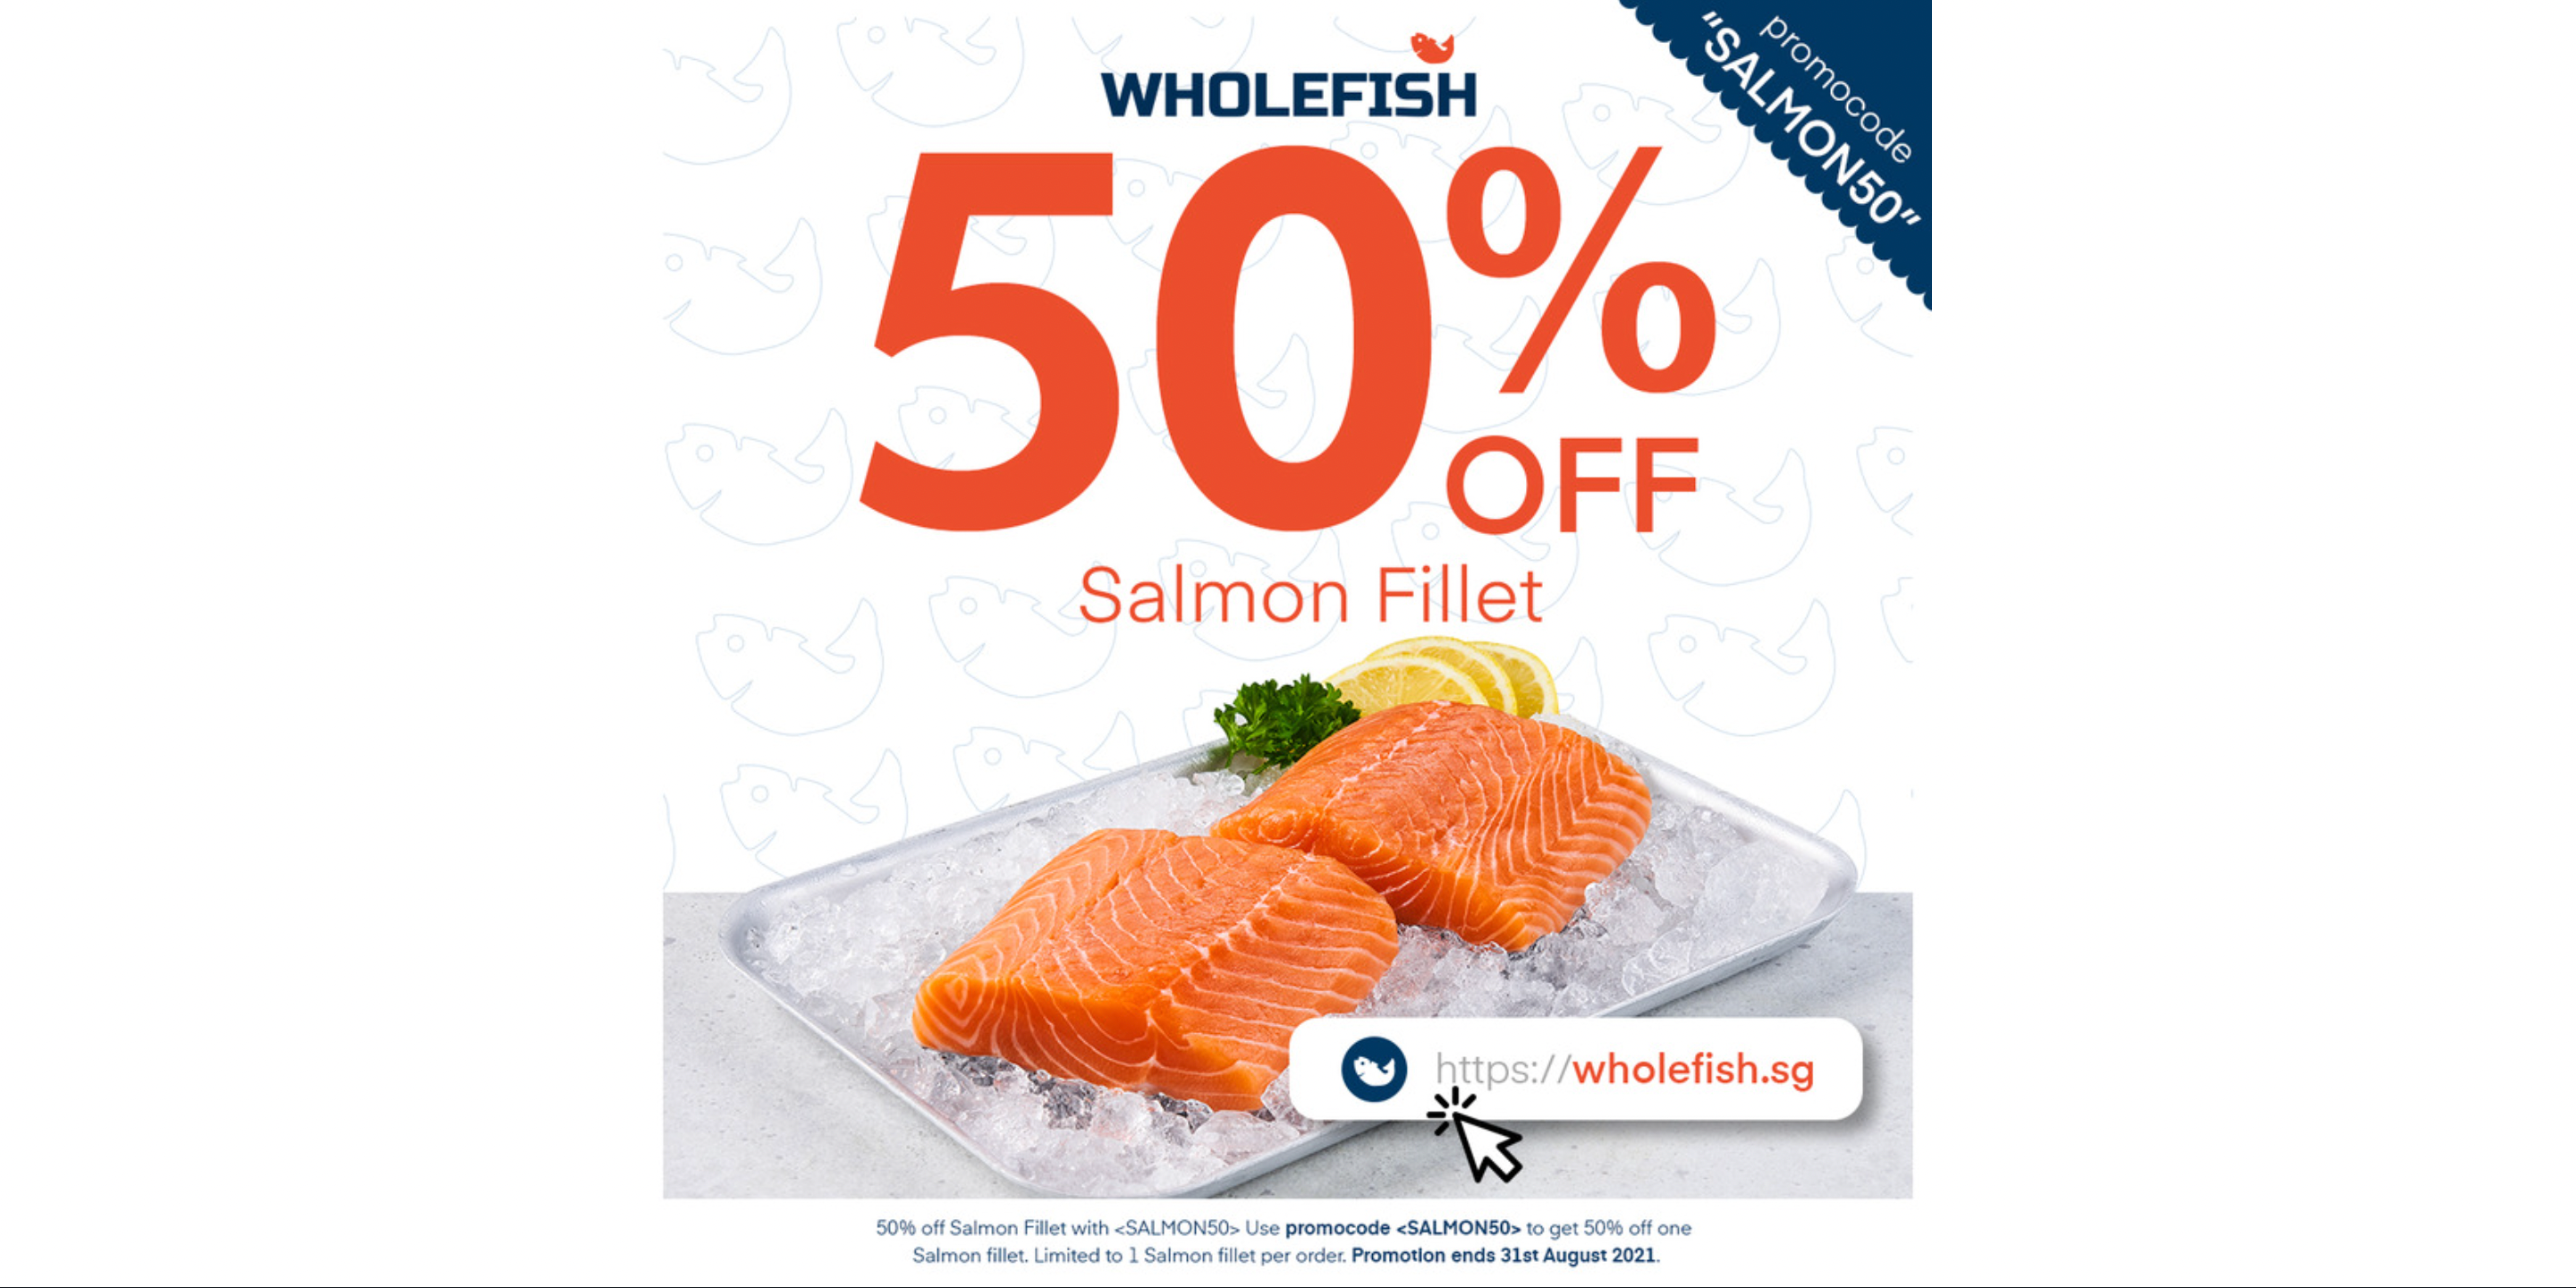 [Promotion] 50% OFF Salmon Fillet on WholeFish.sg!